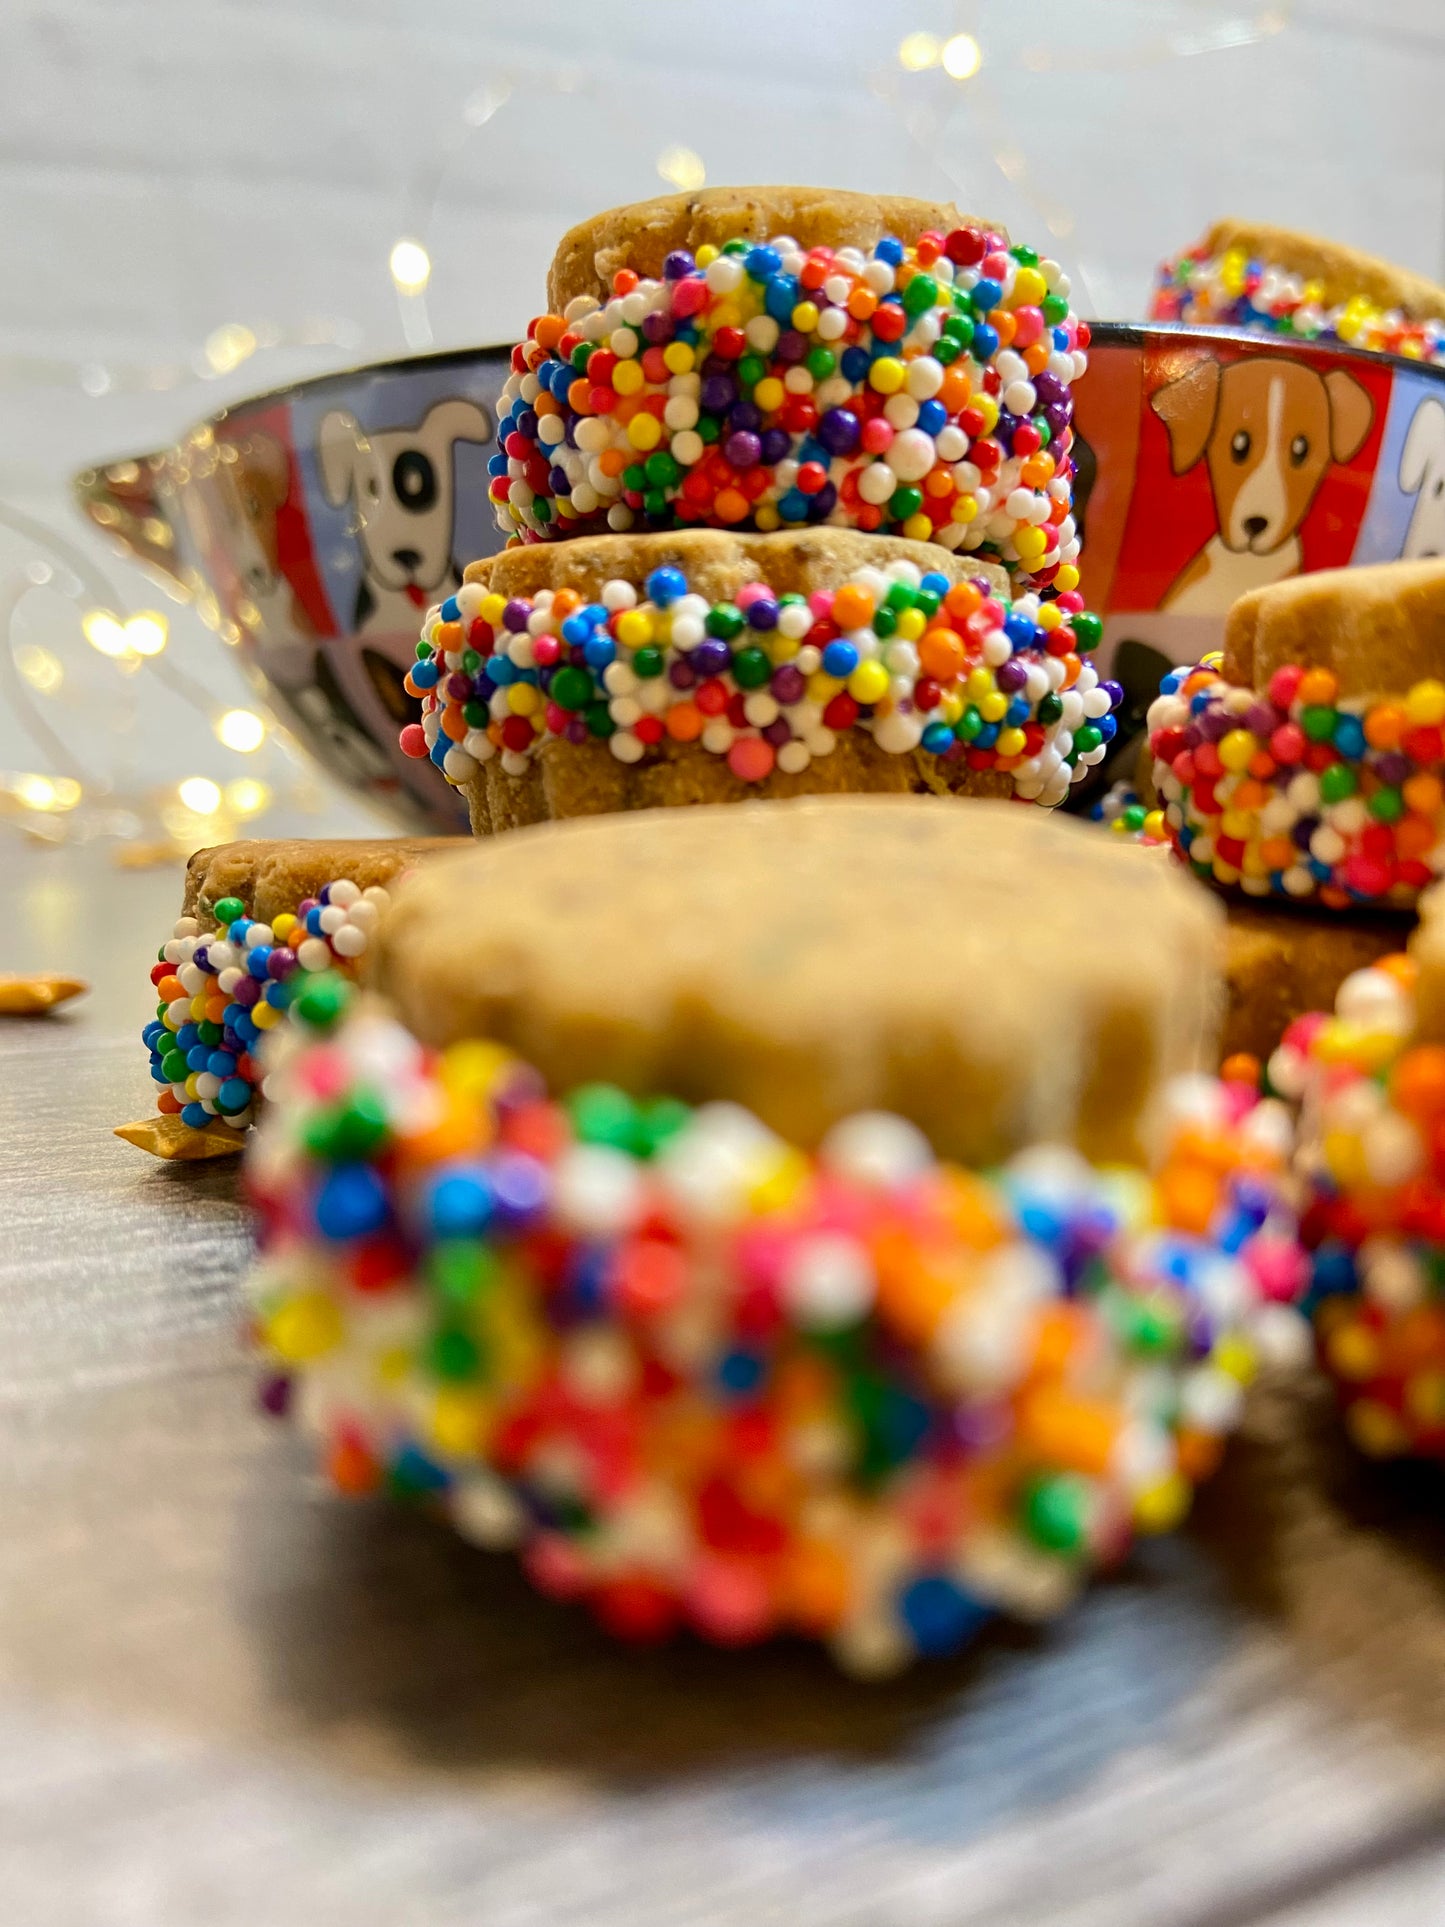 Rainbow Crème Sandwich Canine Cookie Gift Set